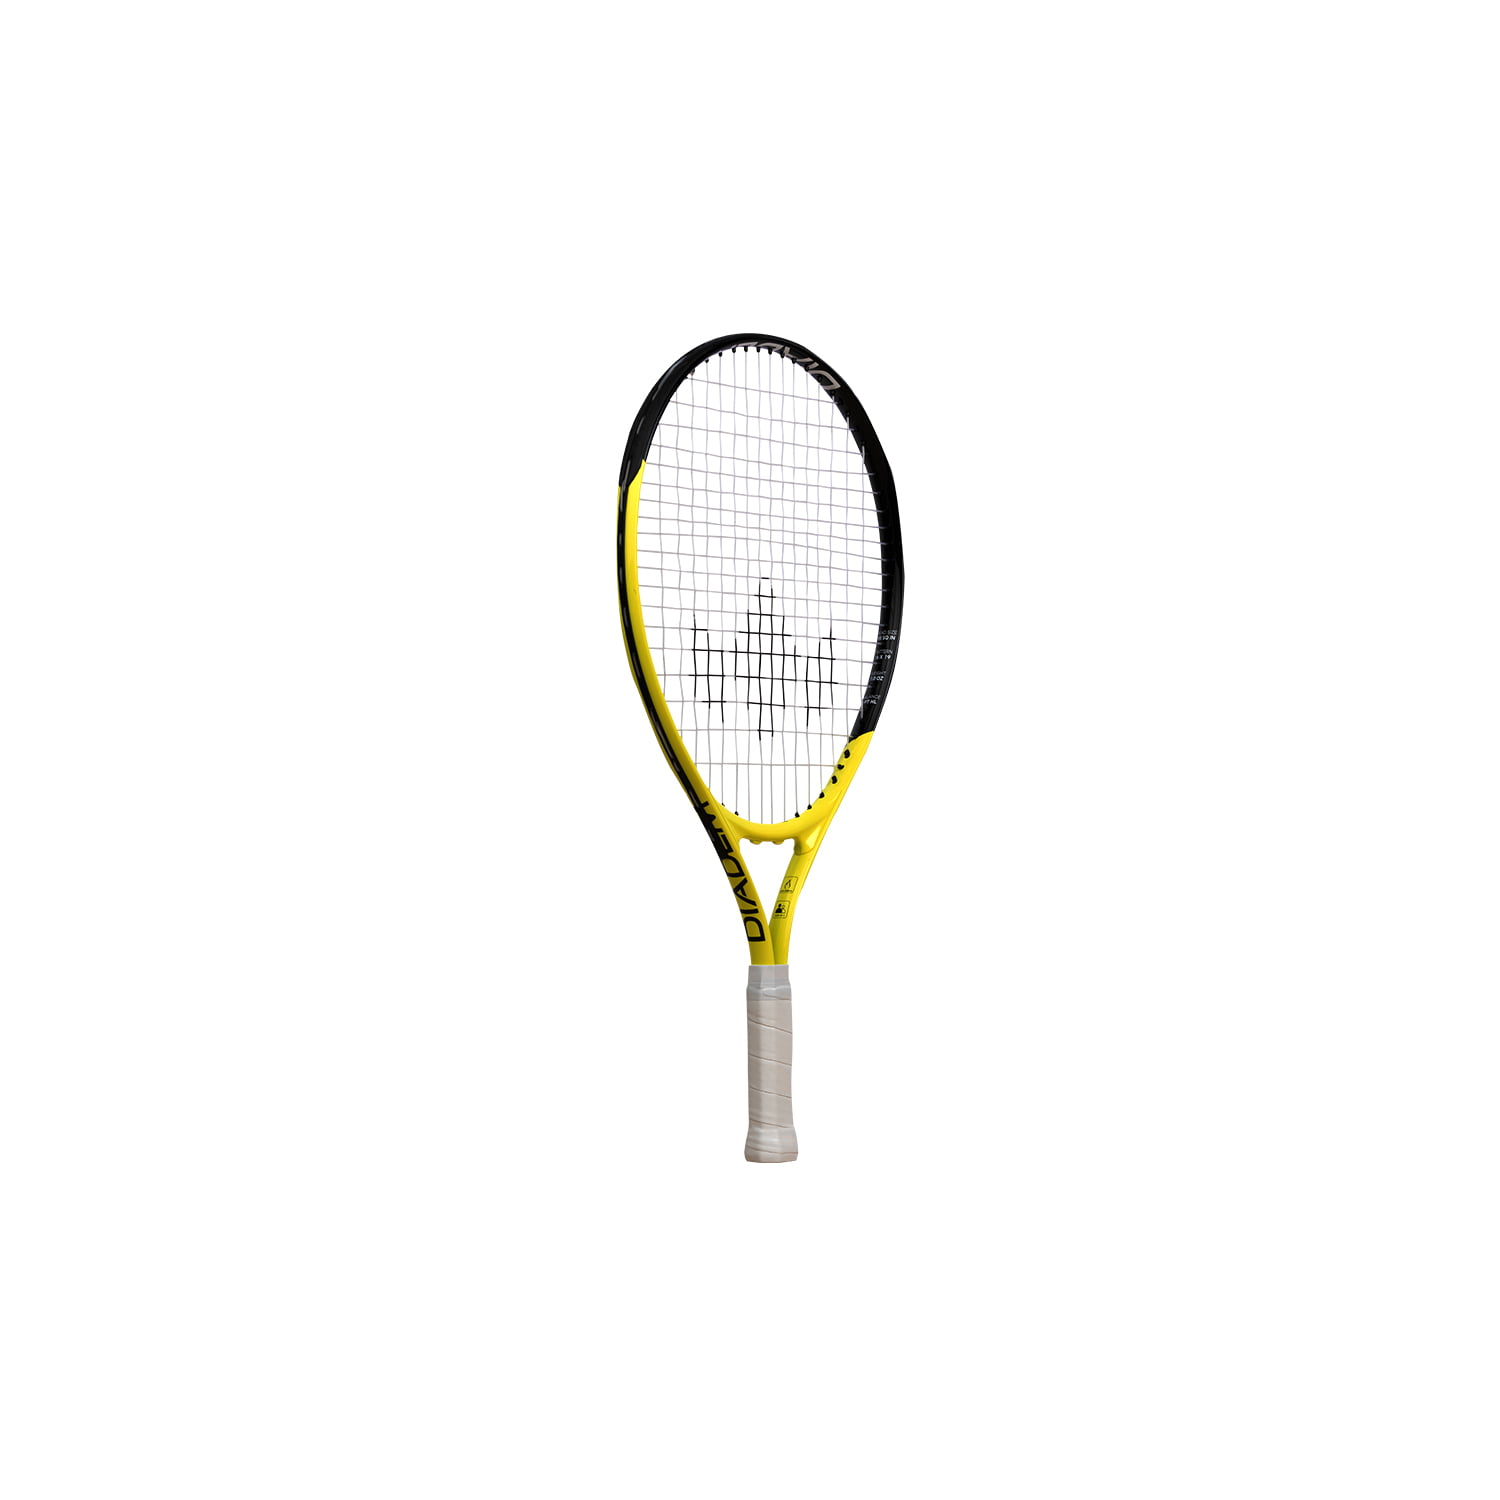 Diadem Sports Diadem Super 21" Junior Tennis Racket,Strung, 7oz, Ages 6-8, Yellow